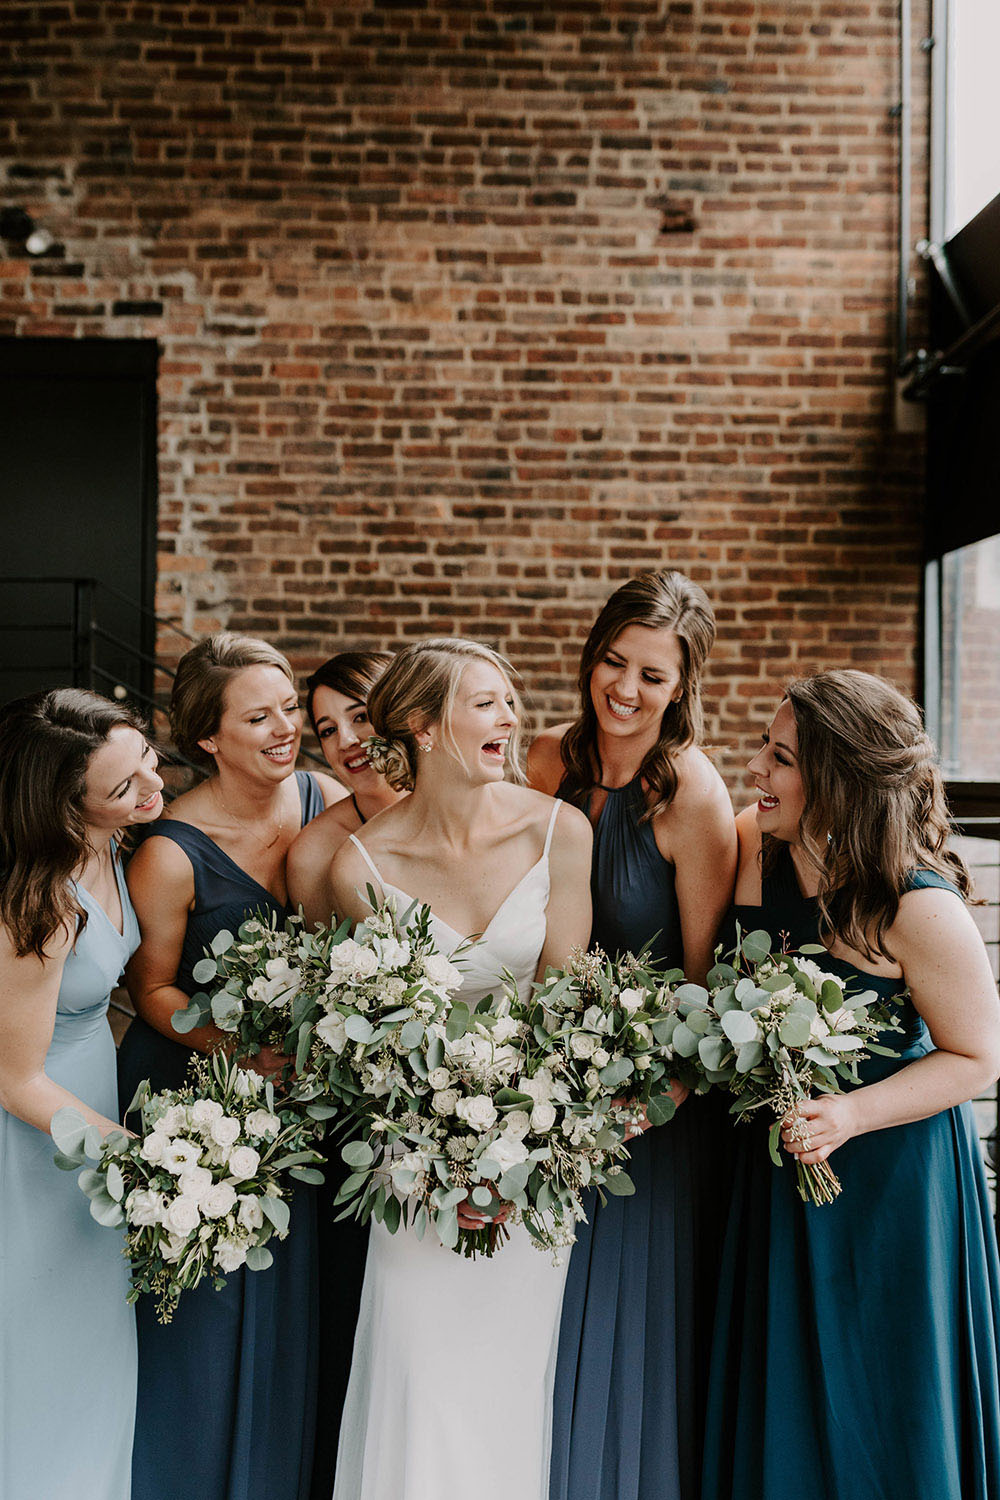 Linda Laughing with Bridesmaids